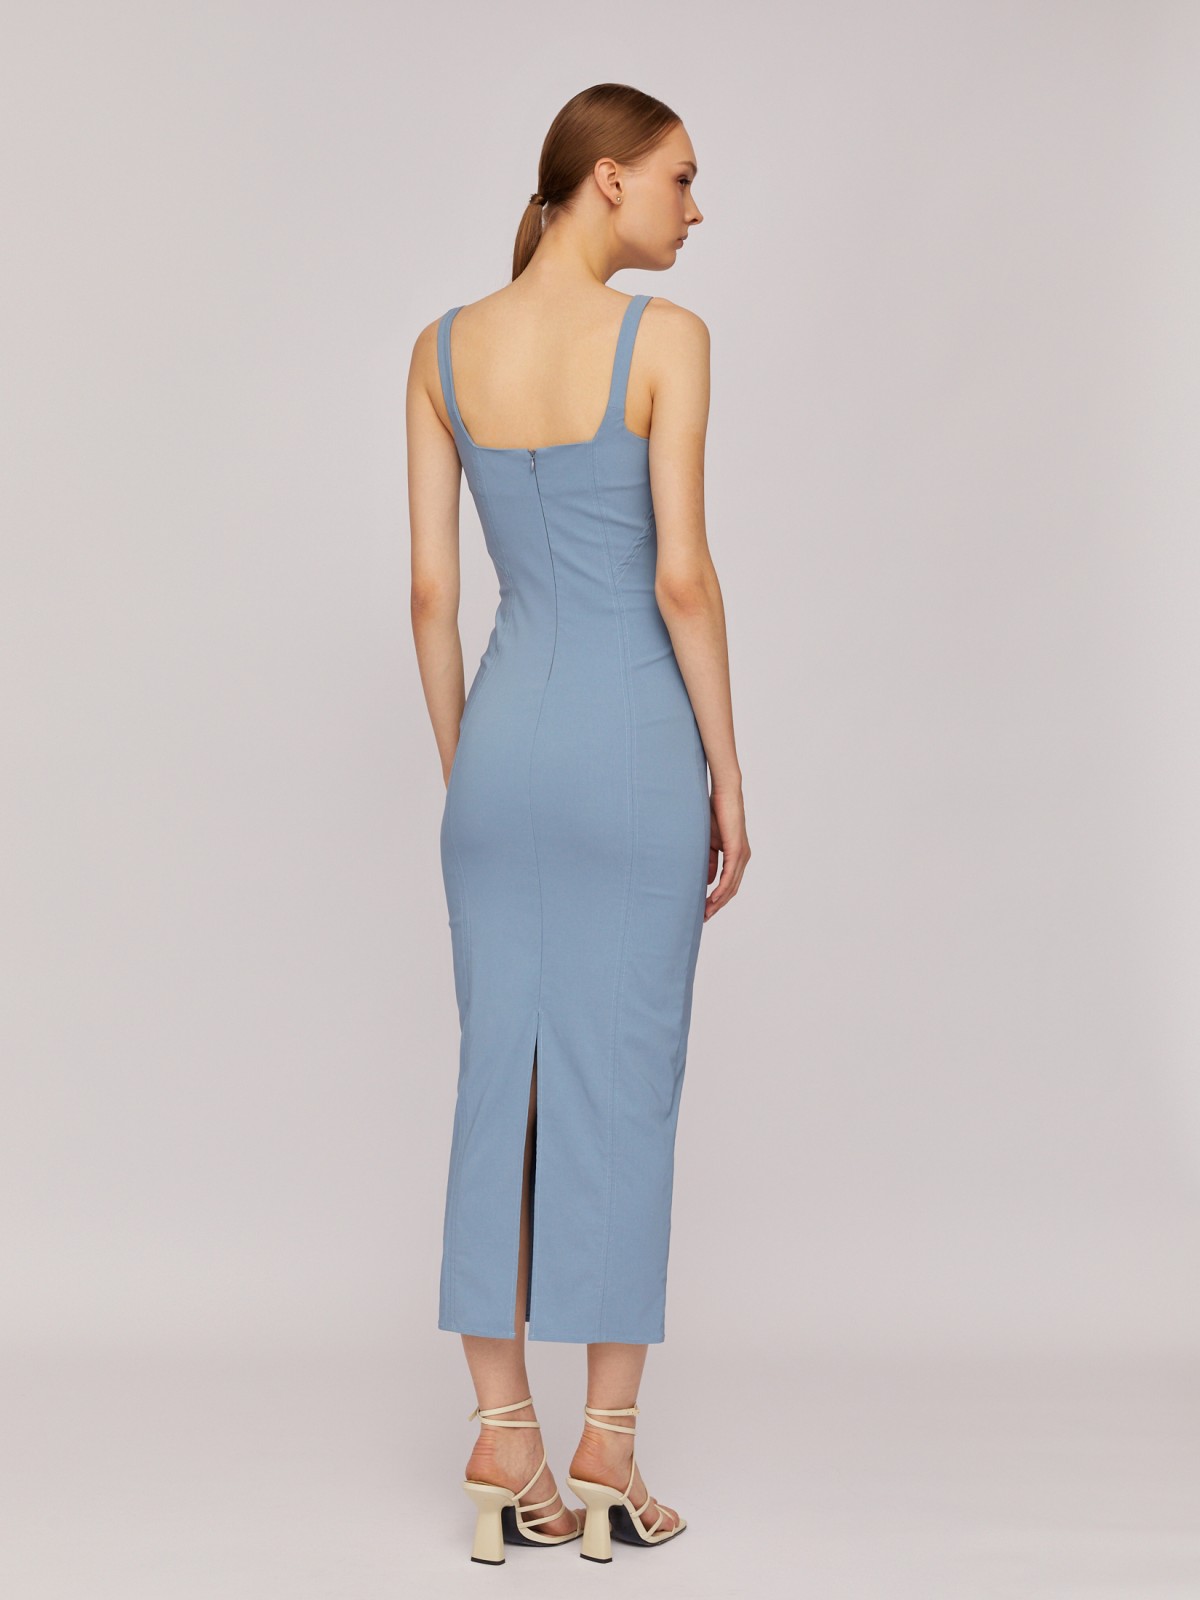 Платье-футляр без рукавов с имитацией корсета zolla 02425824Y091, цвет голубой, размер XS - фото 6